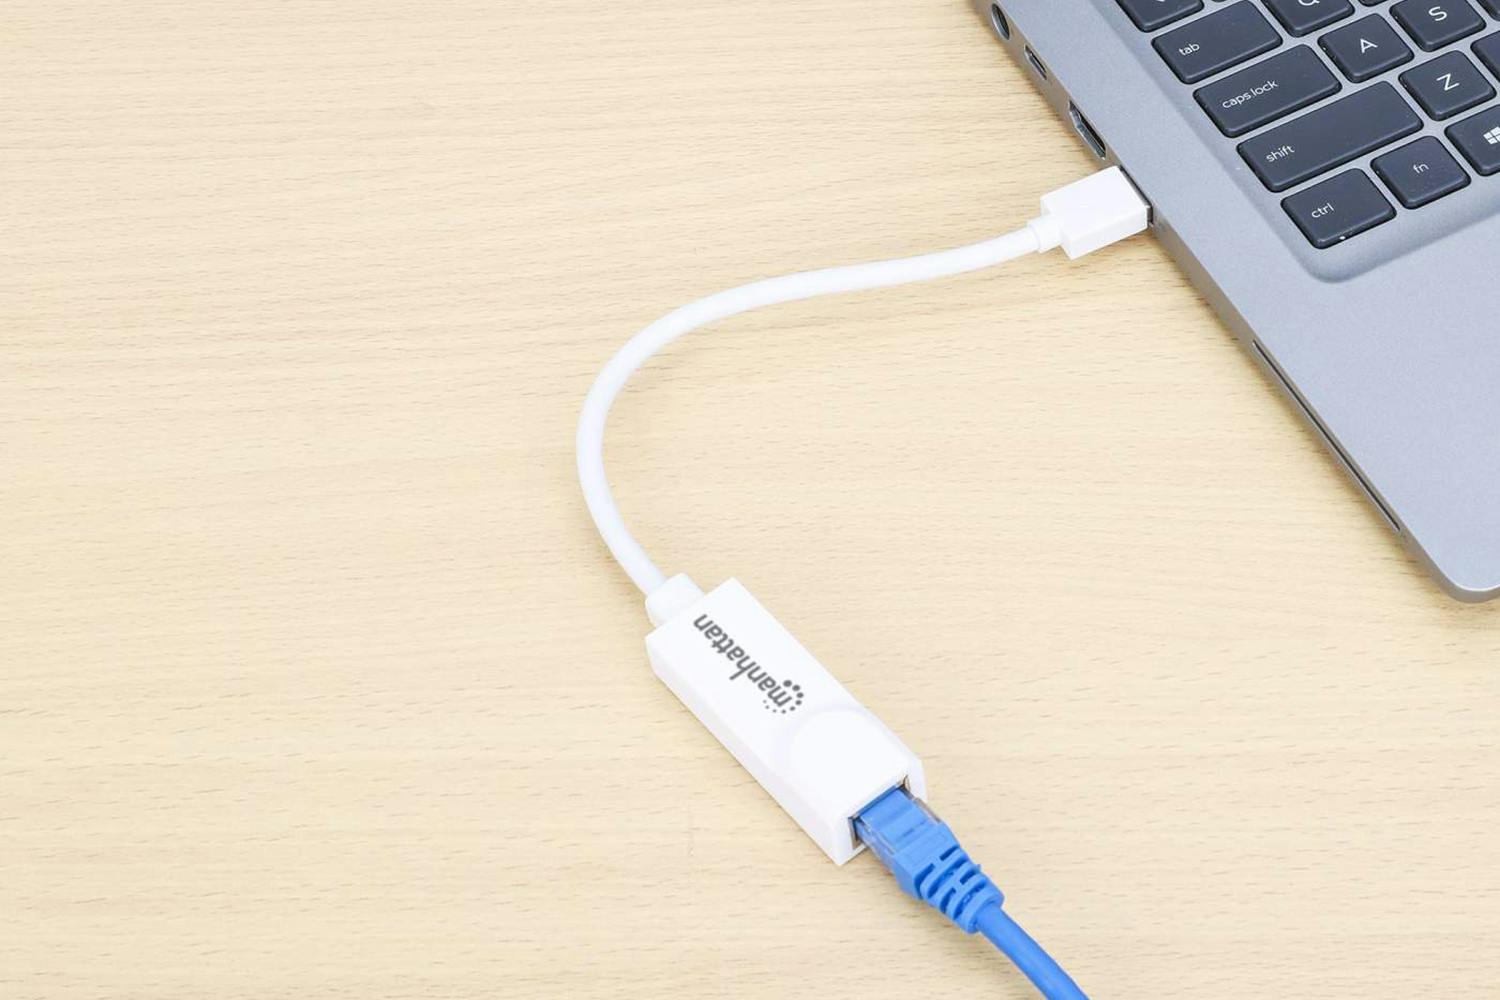 Manhattan USB 3.0 to Gigabit Network Adapter